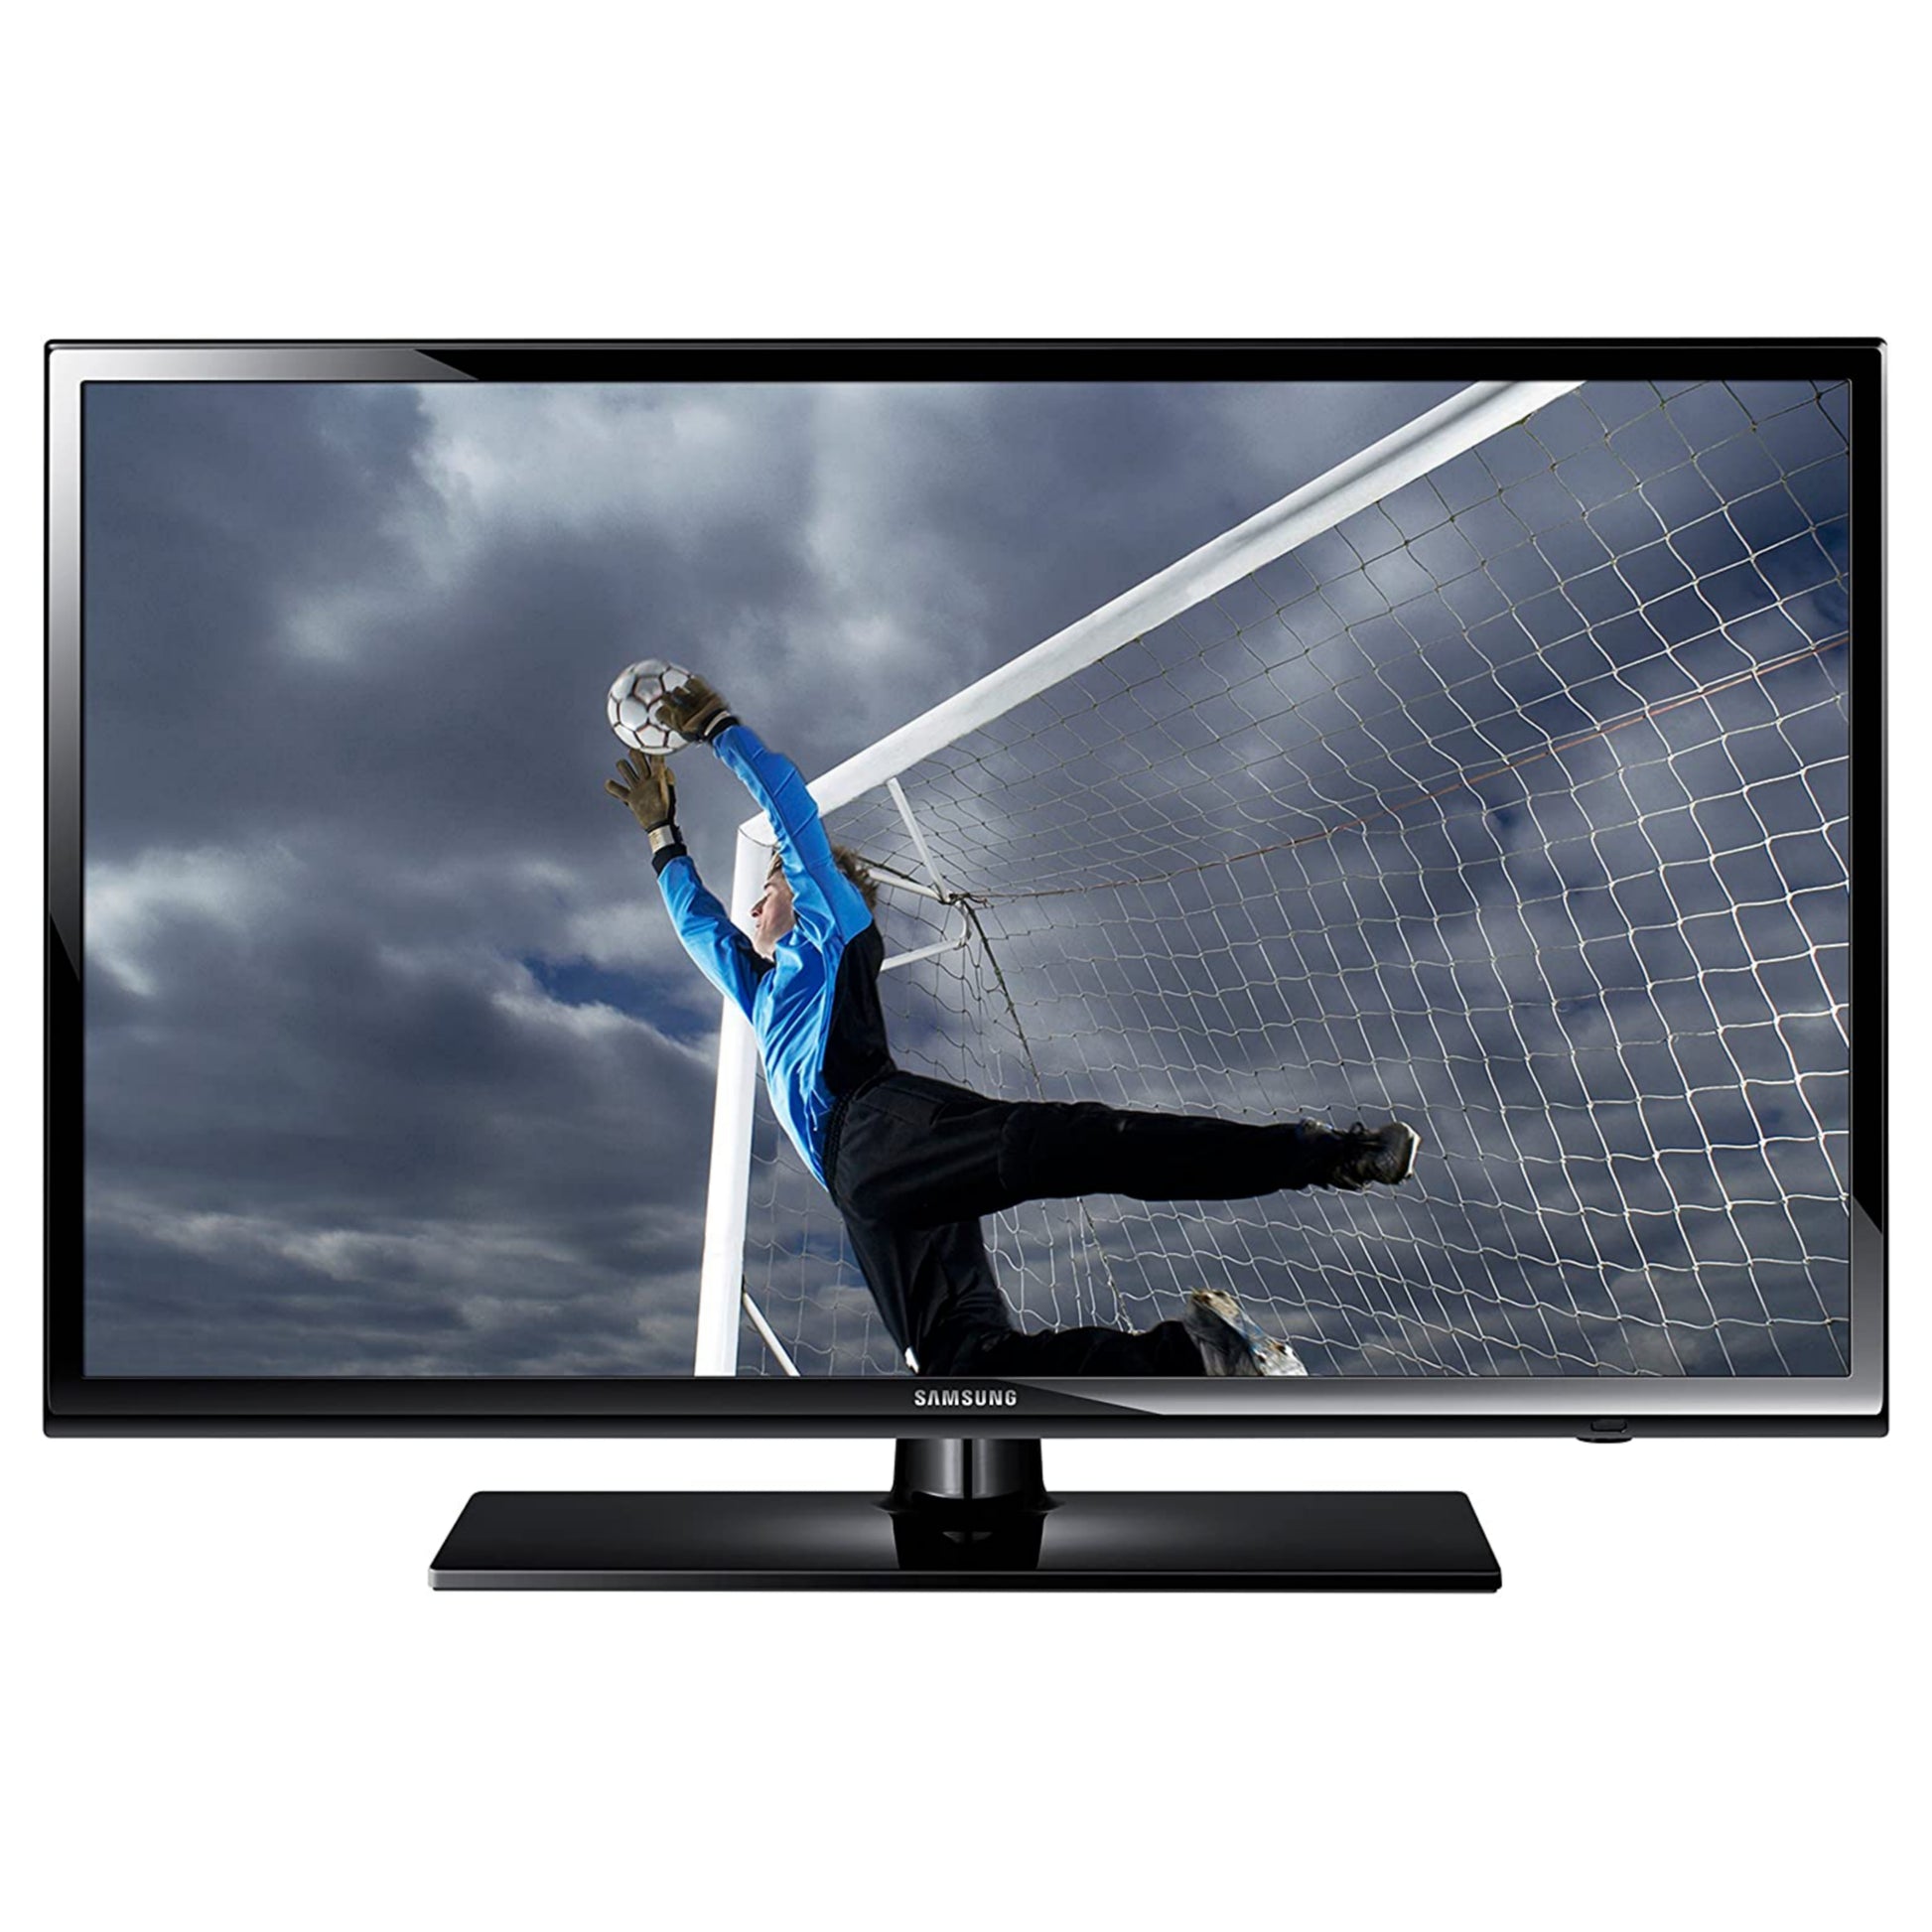 SAMSUNG 40 Inch Full HD LED TV - London Used